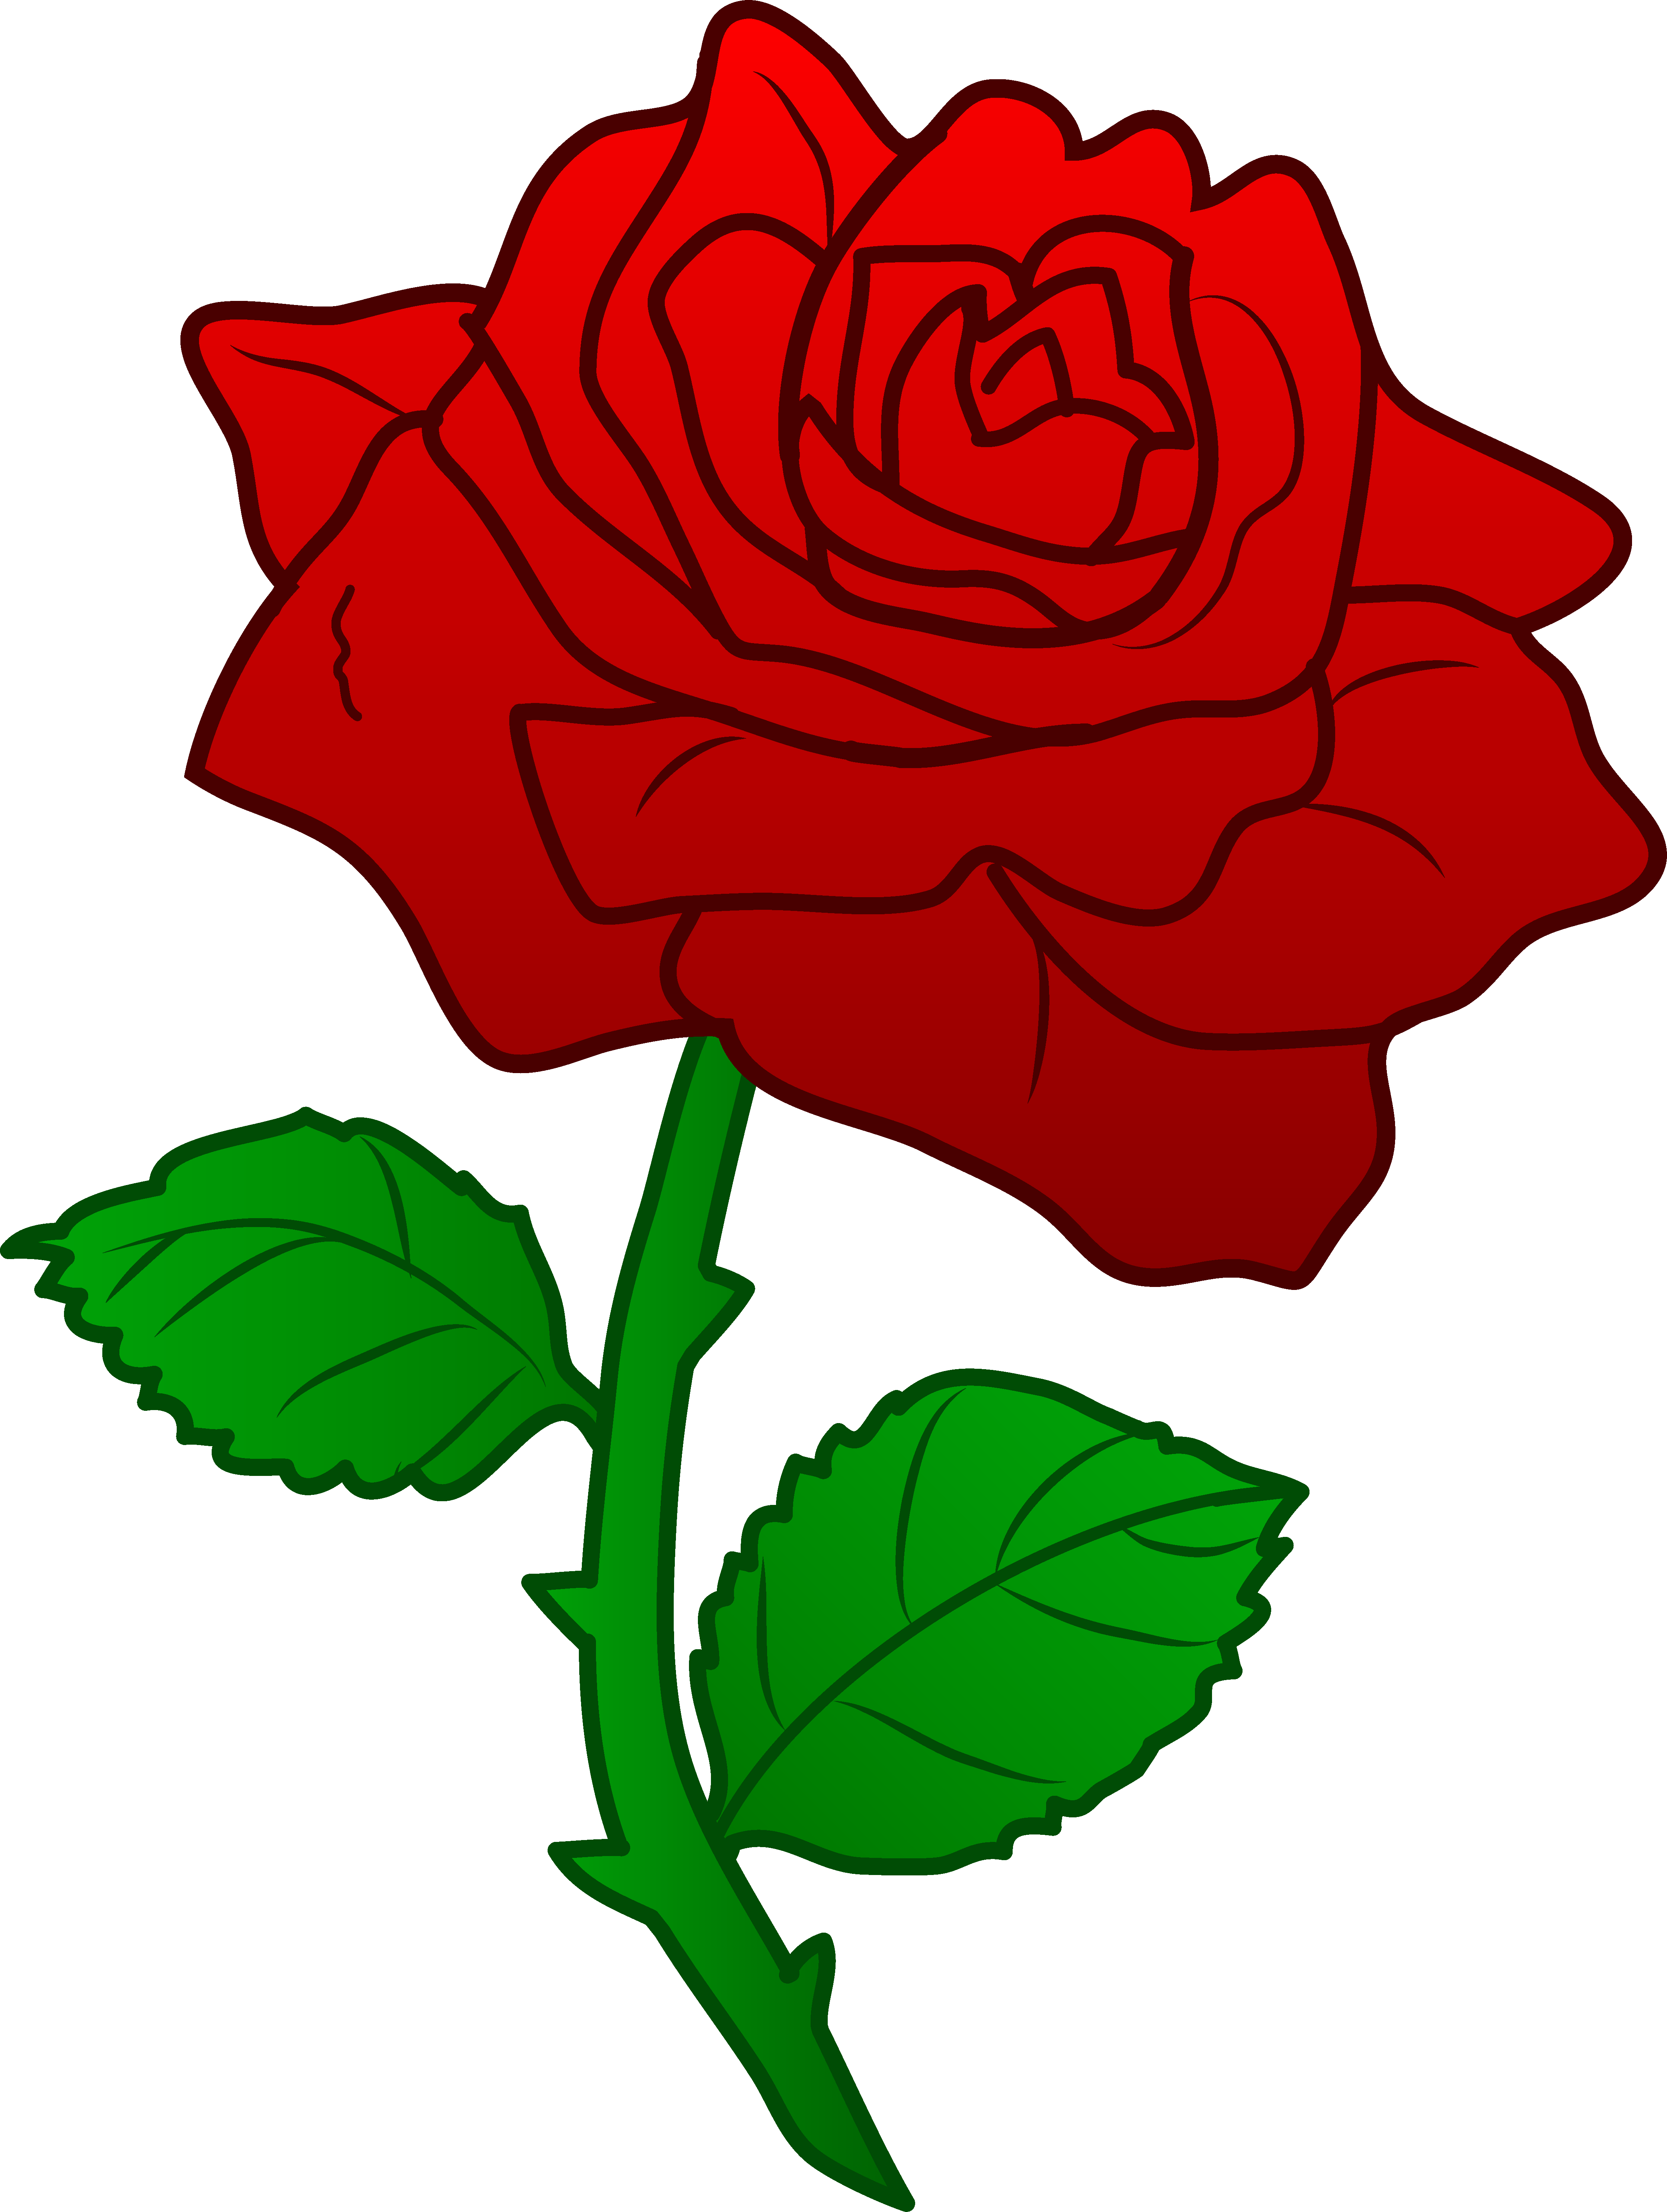 single rose clipart - photo #10